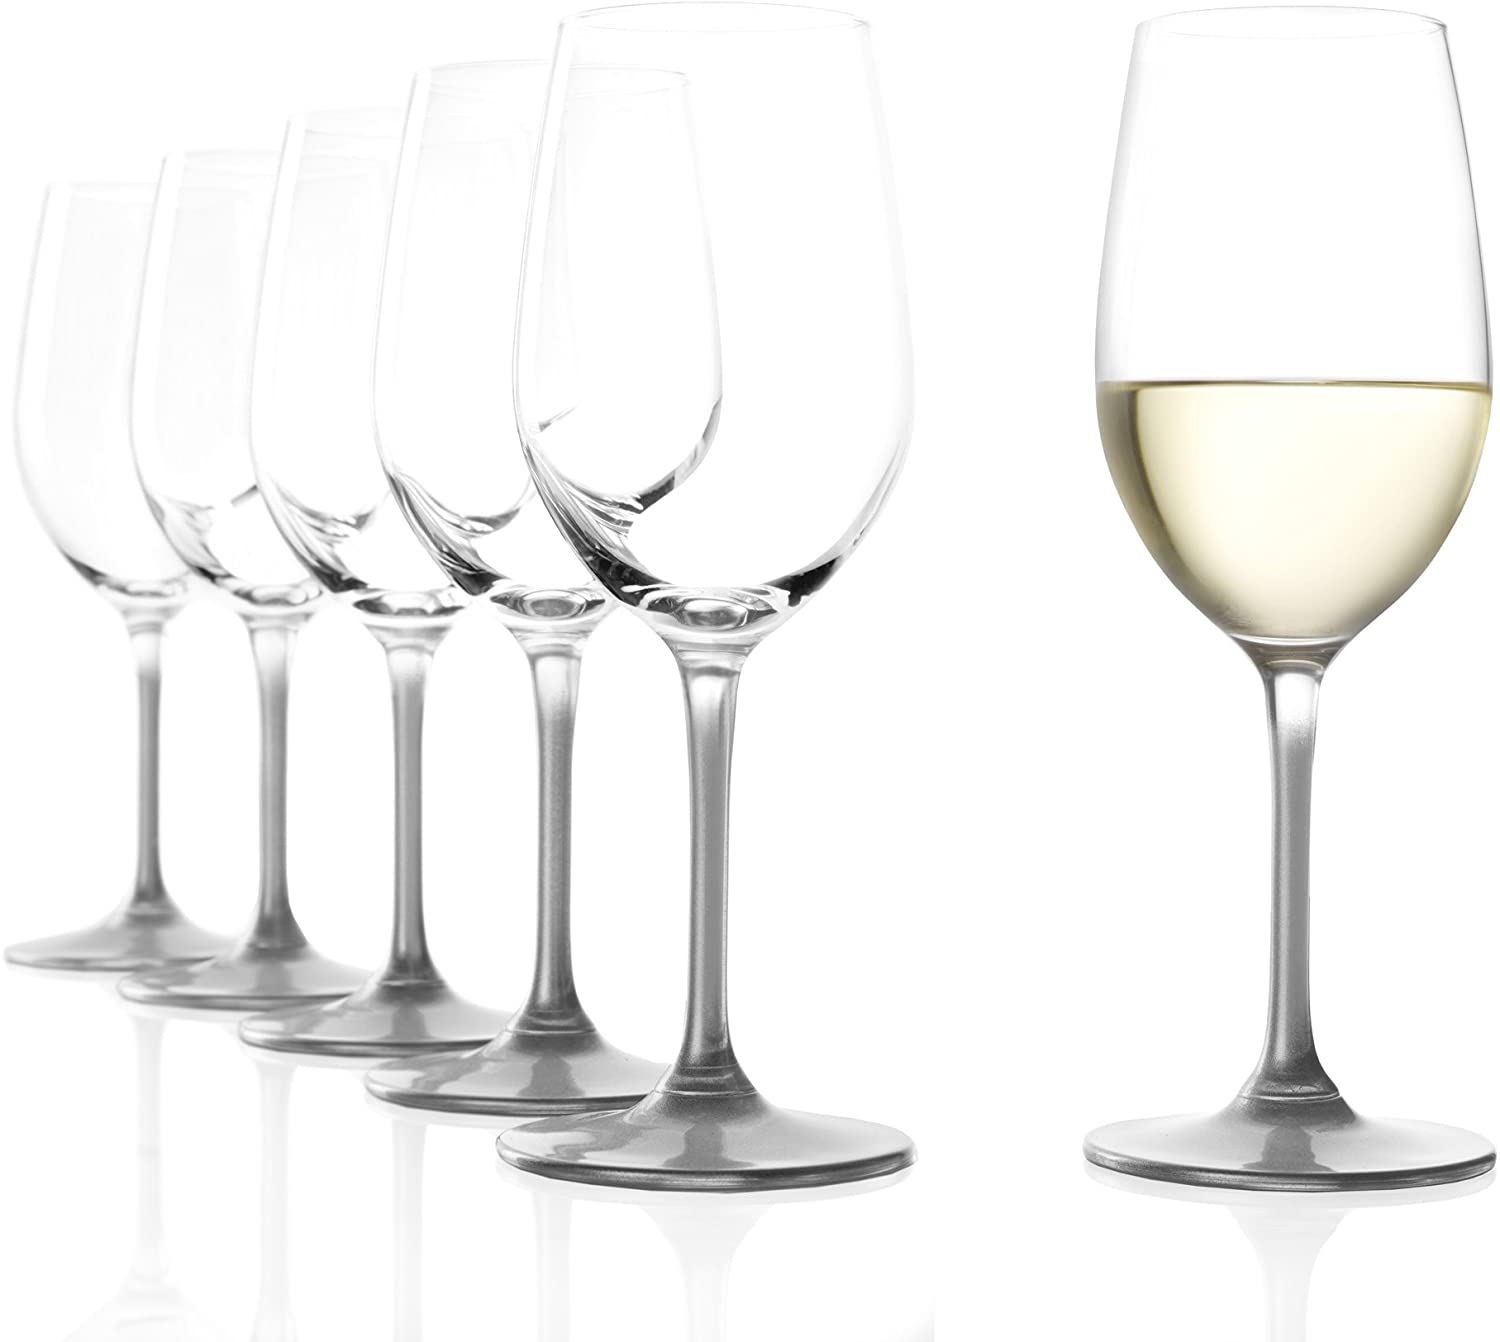 STÖLZLE LAUSITZ White Wine Glasses Event 360 ml in Silver I White Wine Glasses Set of 6 I Wine Glasses Dishwasher Safe I White Wine Goblets Set Shatterproof I High Quality Crystal Glass